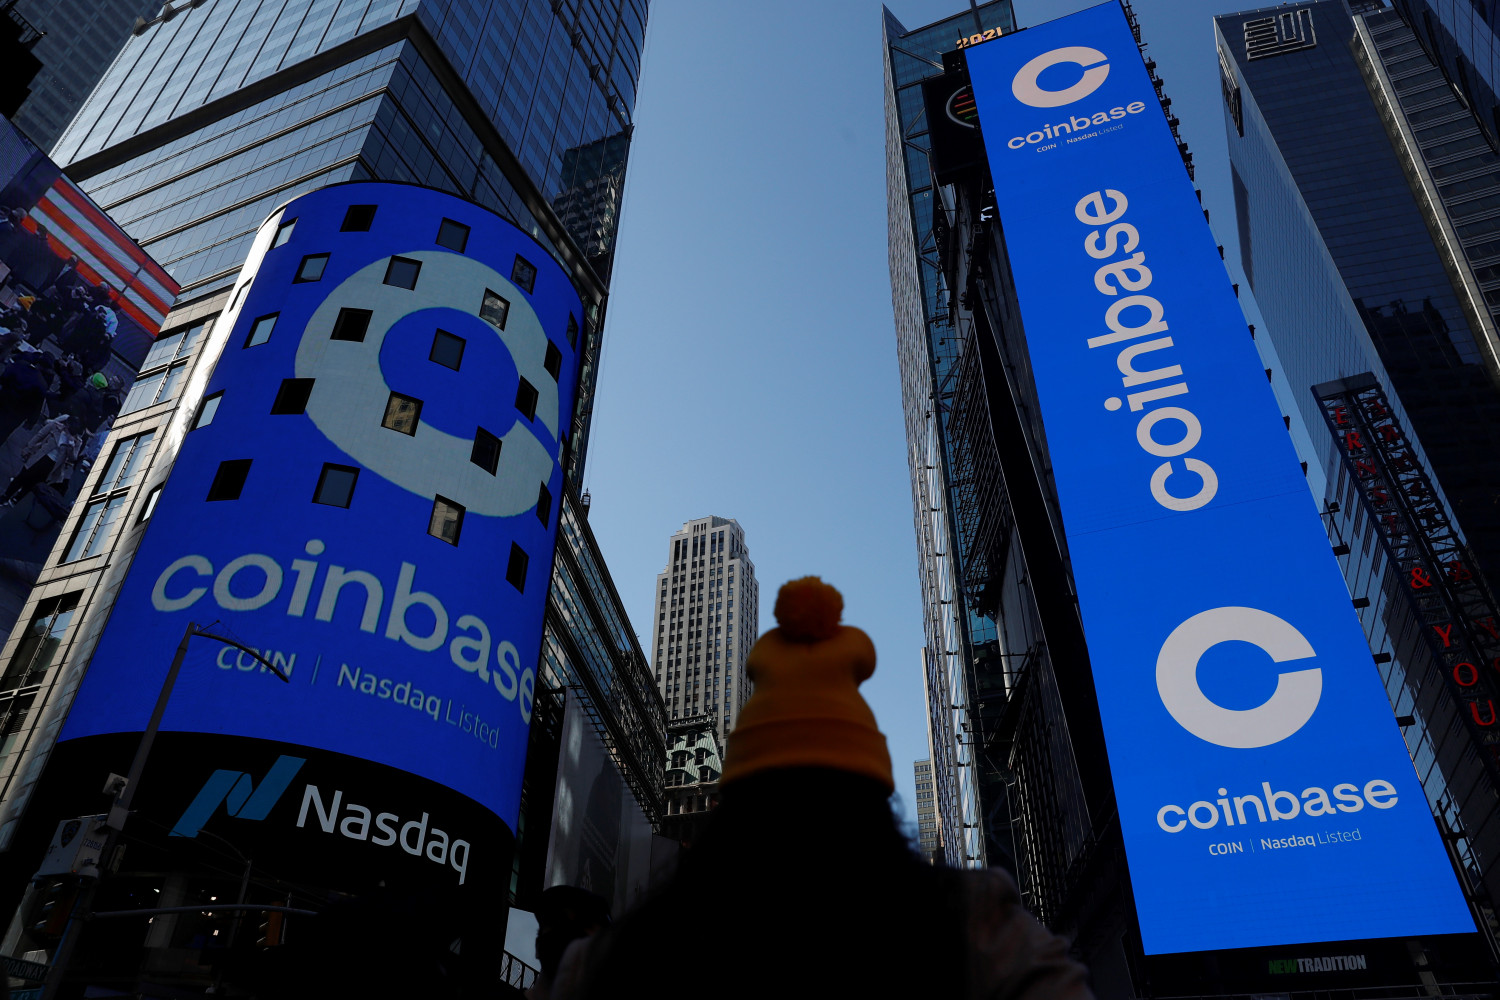 coinbase valorisee pres de 100 milliards de dollars pour ses debuts en bourse 20210514105710 